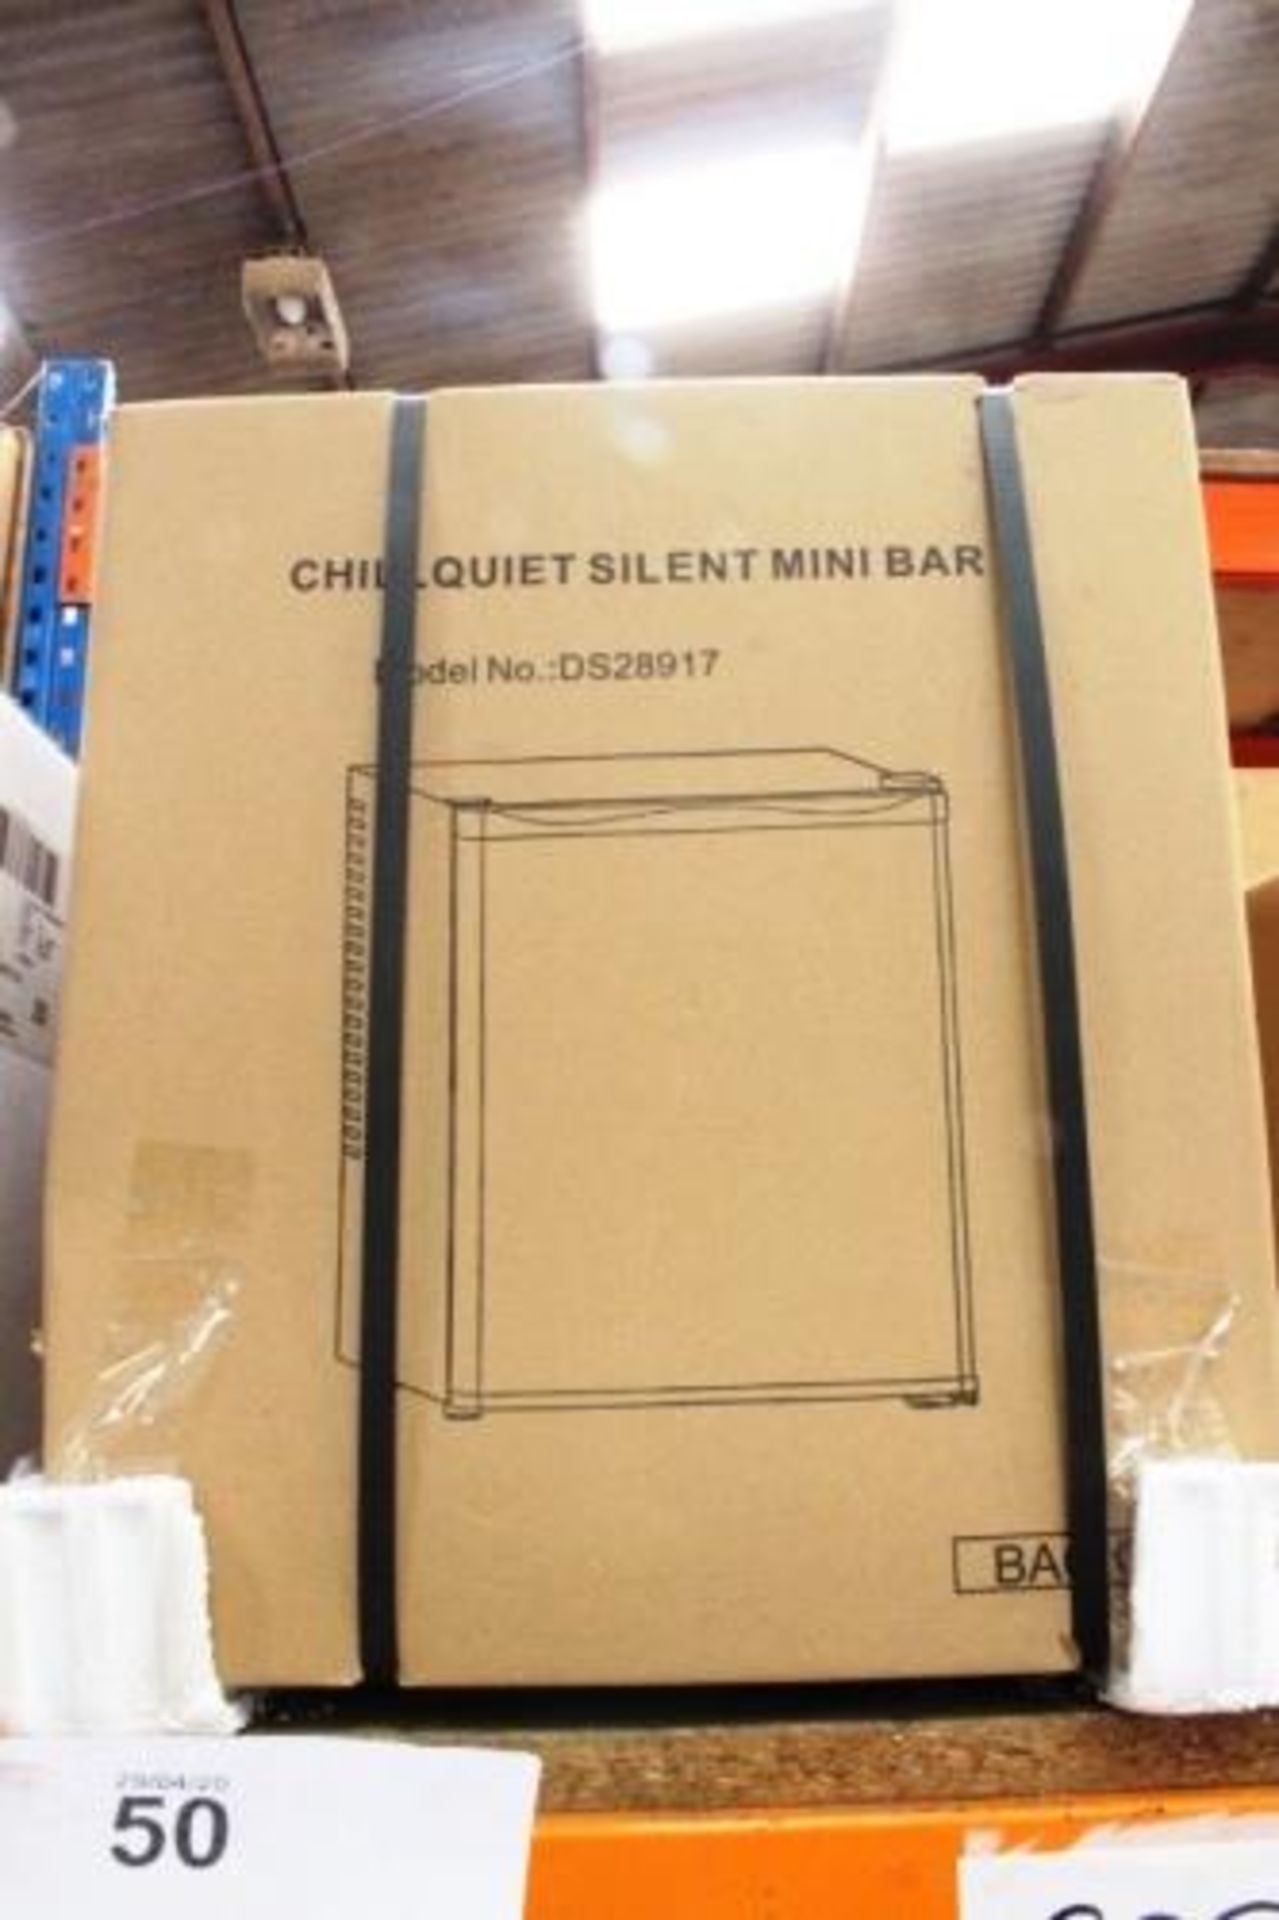 A Drink Stuff chill quiet silent mini bar, model DS28917 - Sealed new (ES3)